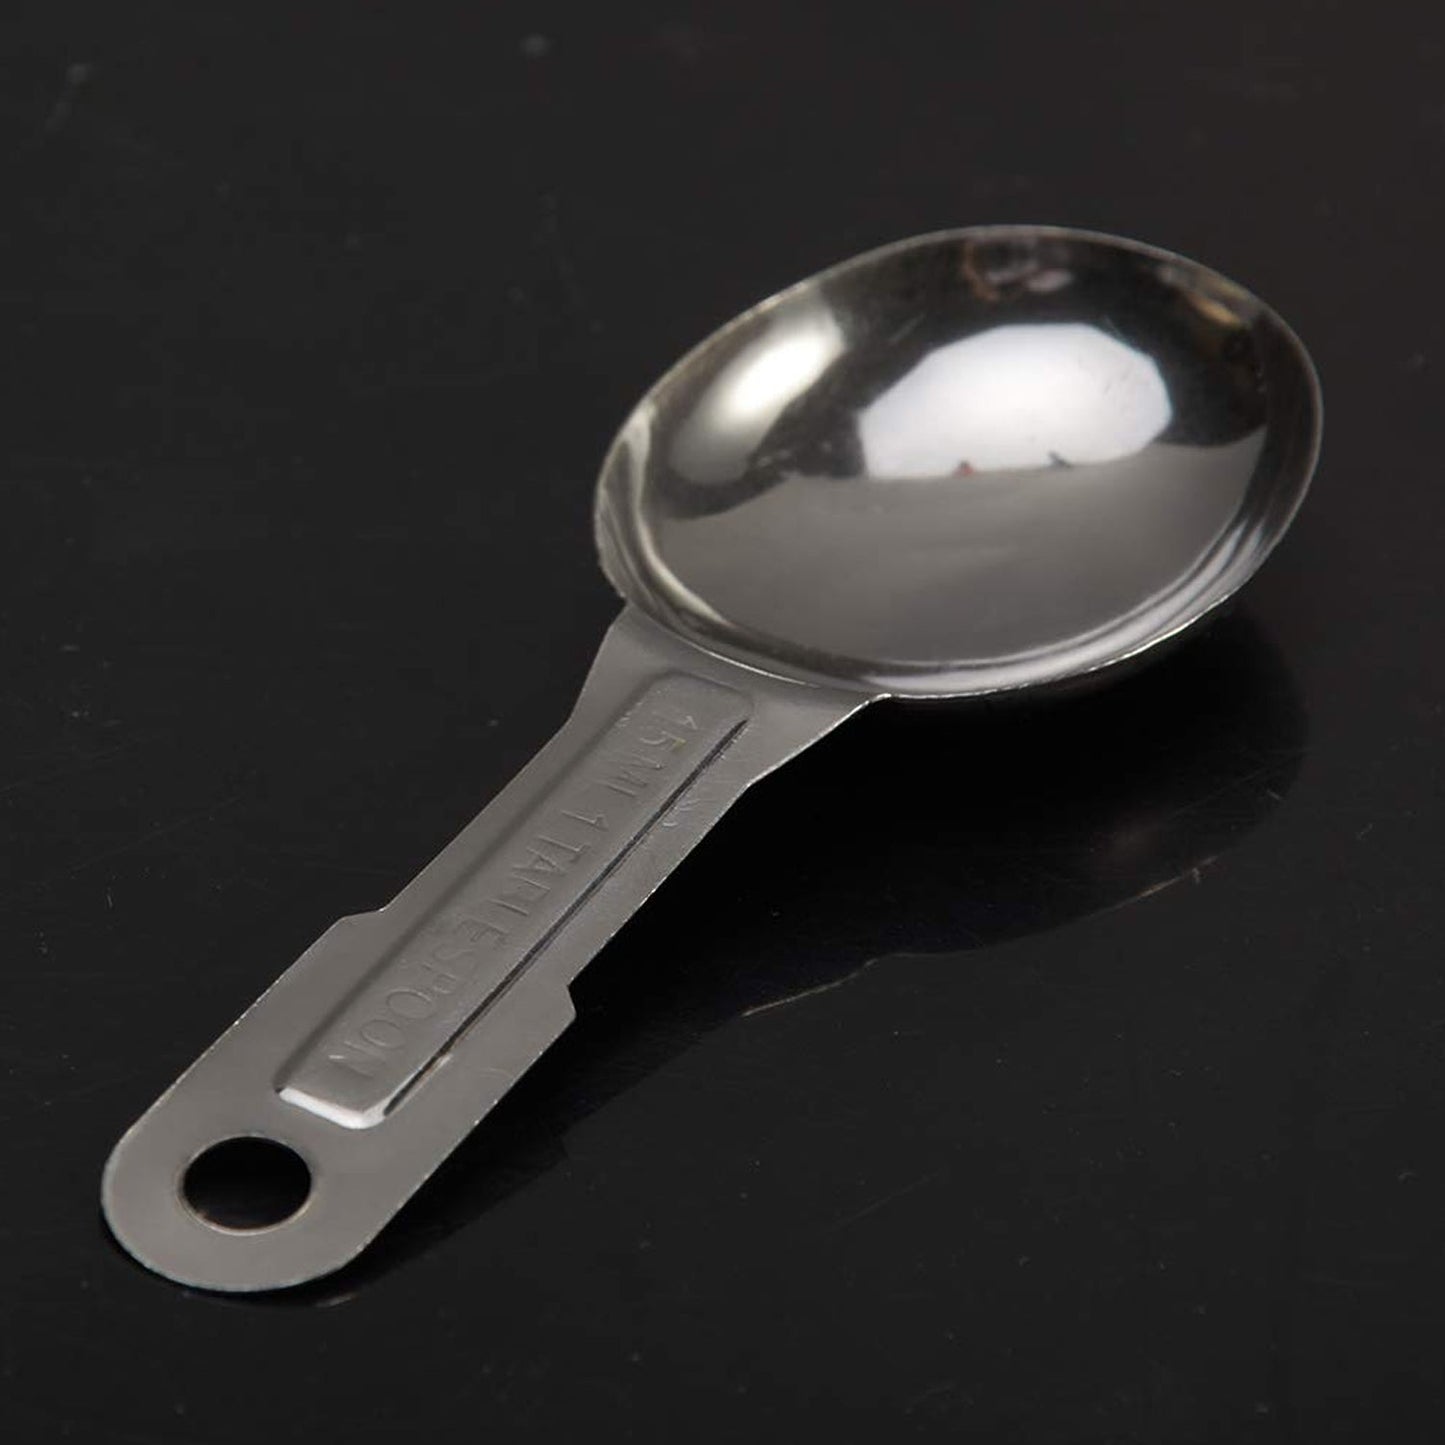 Stainless Steel Measuring Spoons, 4pcs / set Durable Anti Rust Measuring Spoon Set Universal for Kitchen Baking